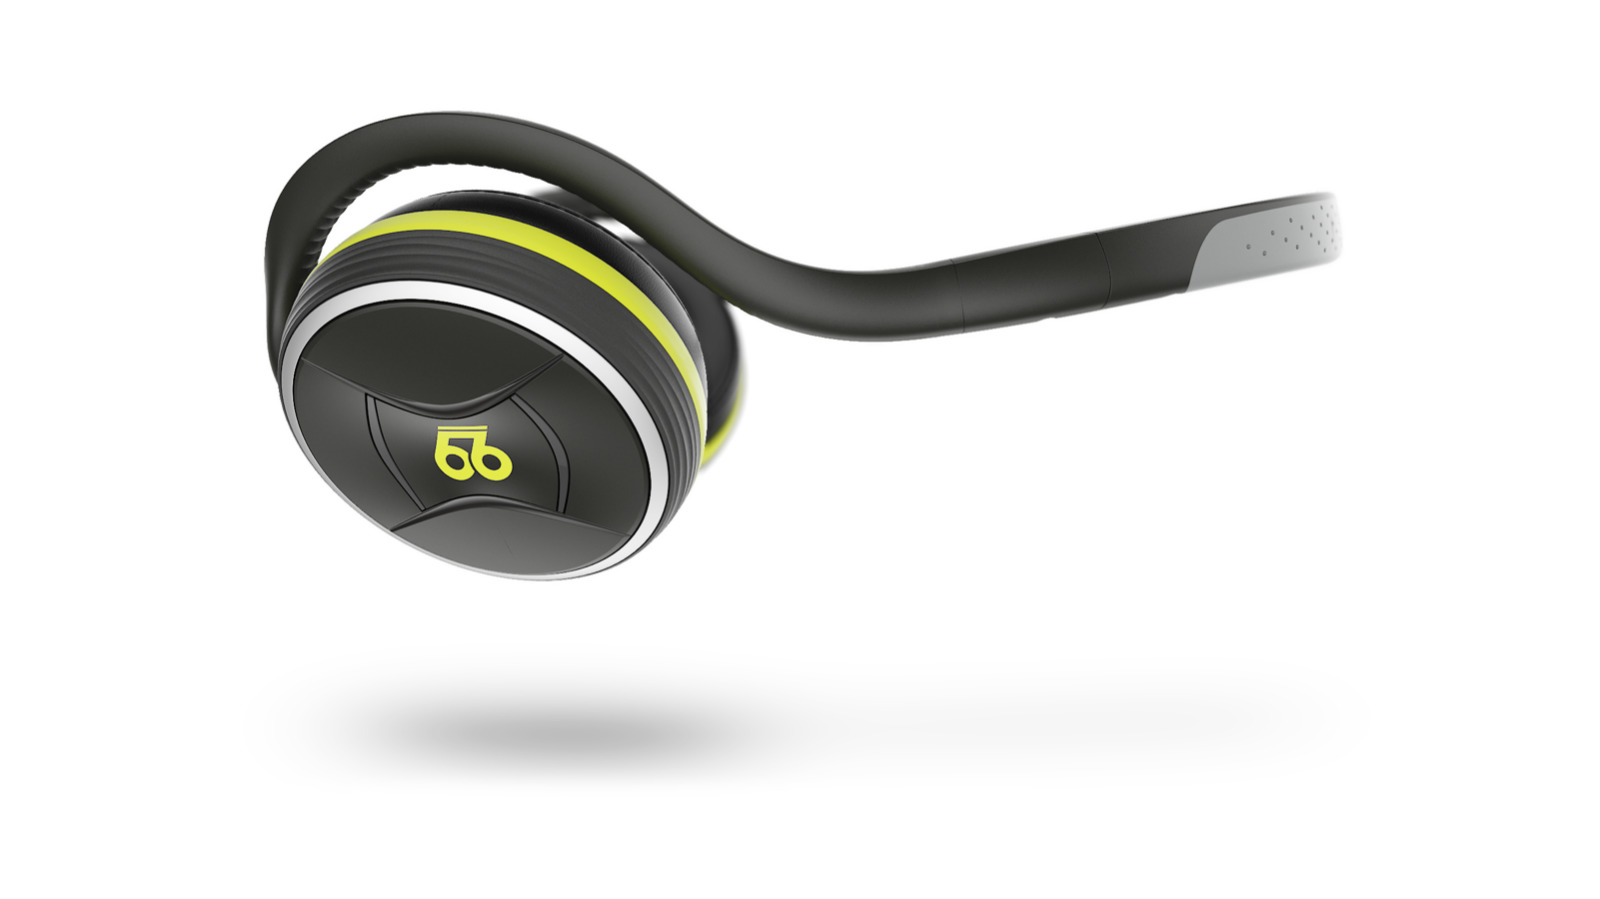 66 Audio - BTS Pro Bluetooth Wireless Sports Headphones w/ HD Sound [Brand New]